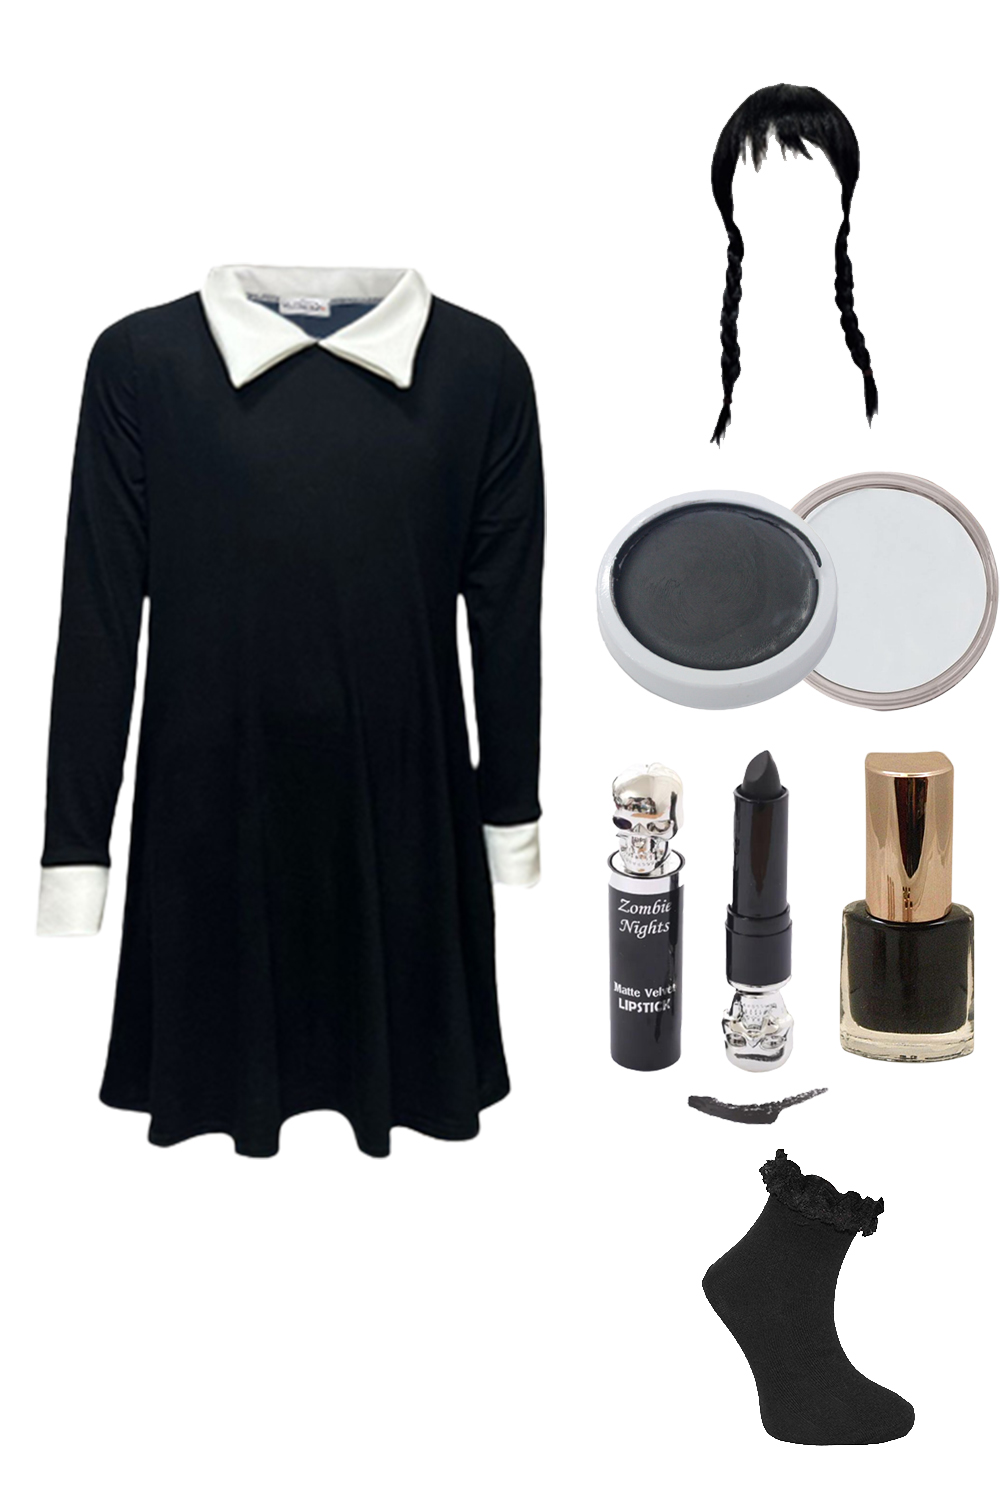 Wickedfun Gothic Girl Plain Costume and Accessory 7 Pcs Set